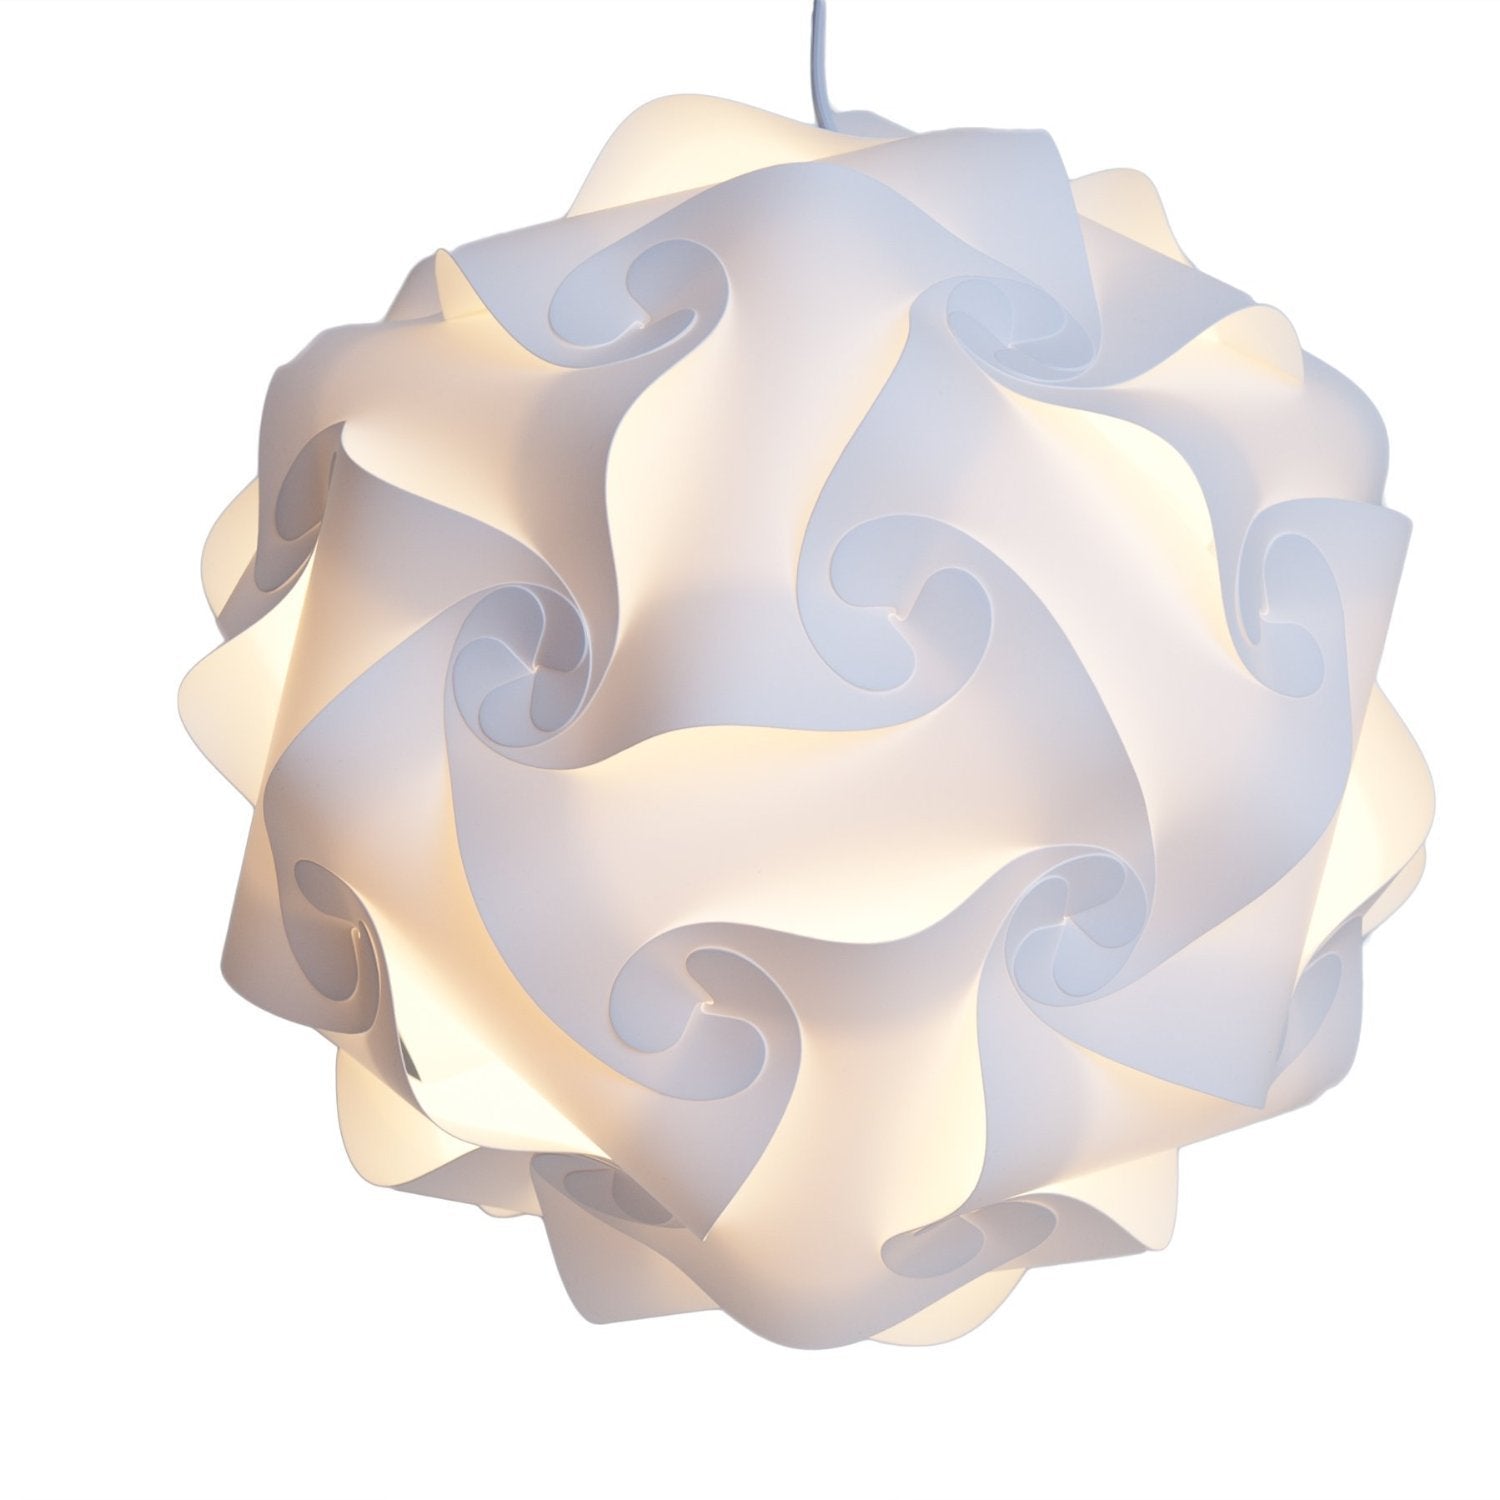 Infinity Lights Medium 13" 30 Pc. Puzzle Lamp Shade Lantern, White